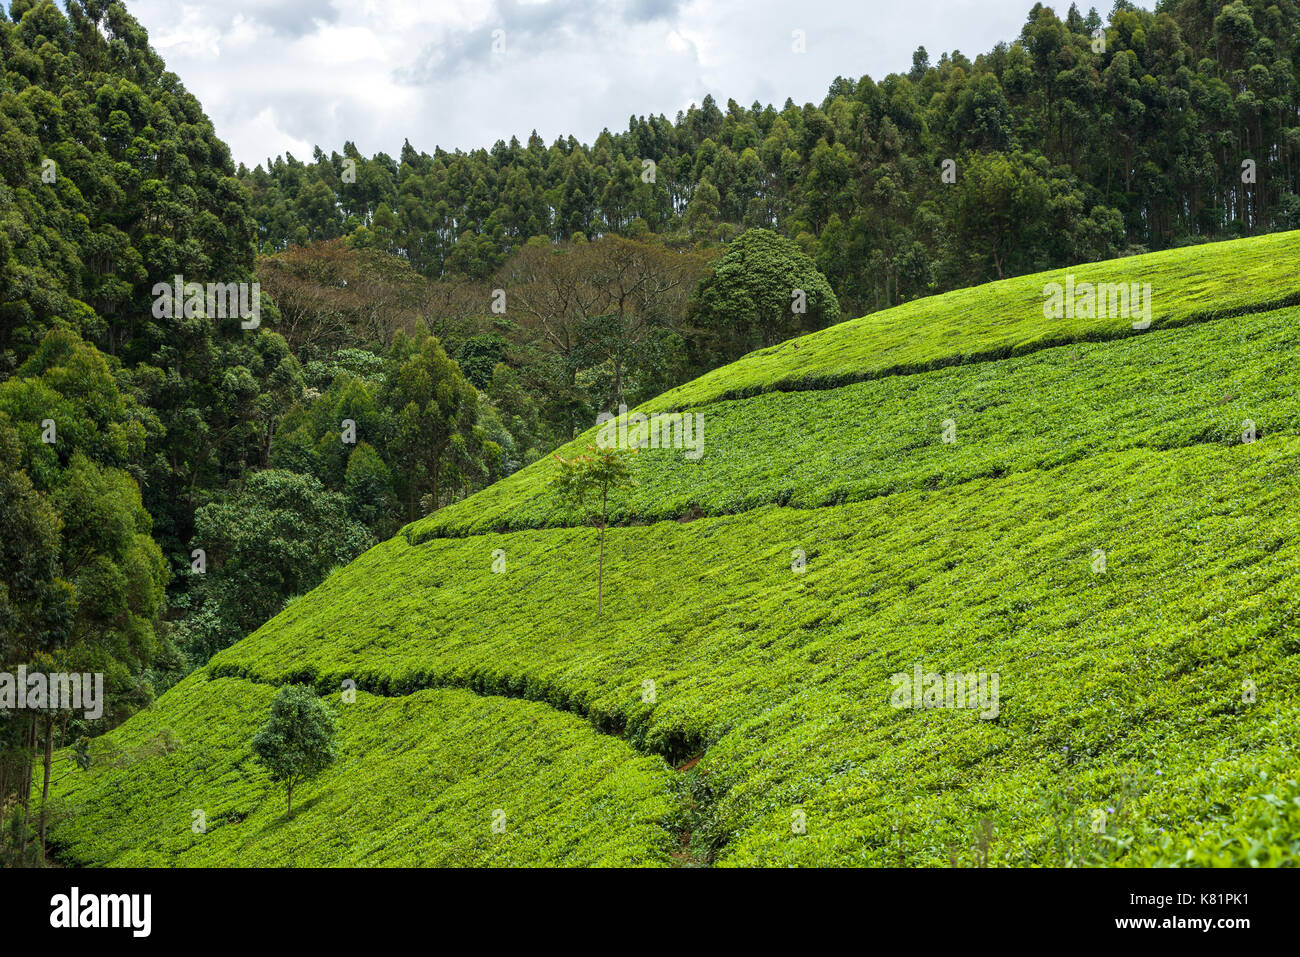 Hills with fields of tea plants in tea plantations, Kenya Stock Photo